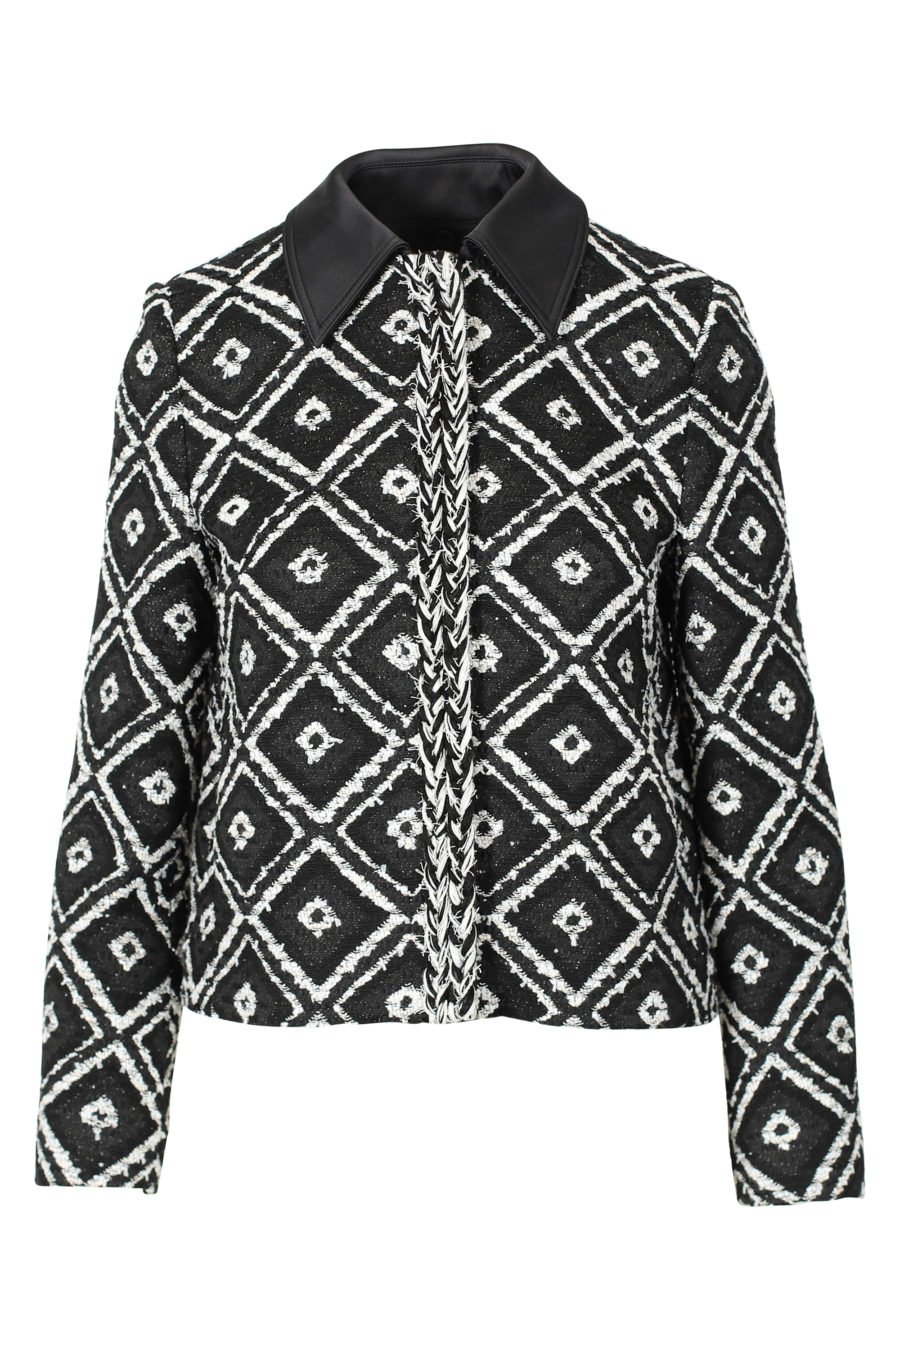 Schwarz-weiße geometrische Jacke "Boucle" - IMG 3116